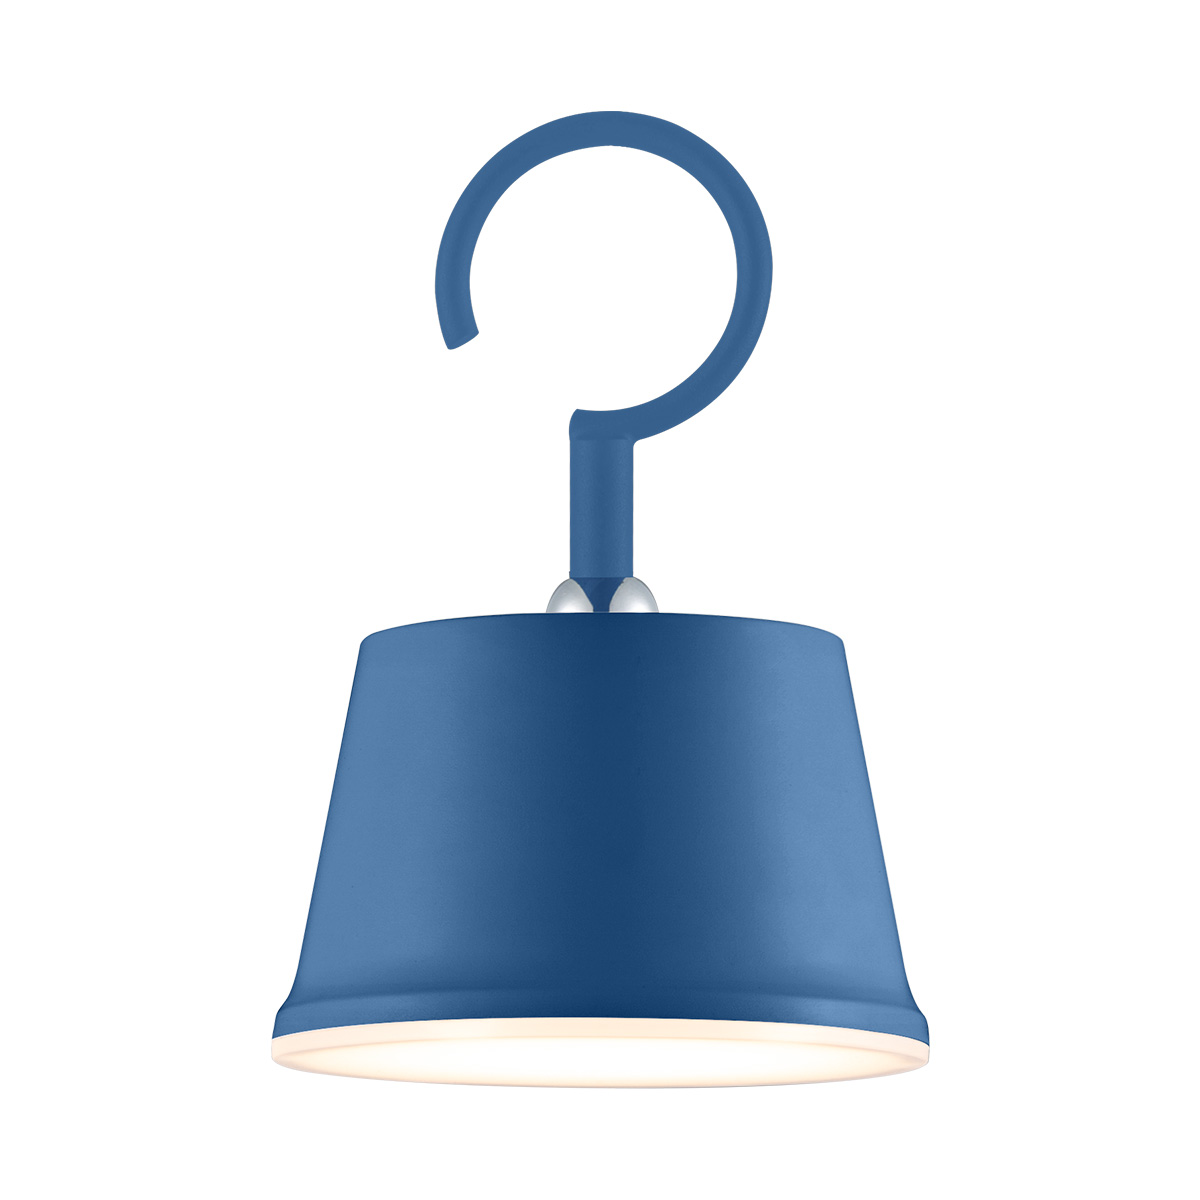 Tangla lighting - TLP7644-01BL - LED Pendant lamp - rechargeable plastic and metal in blue - mini LED pendant